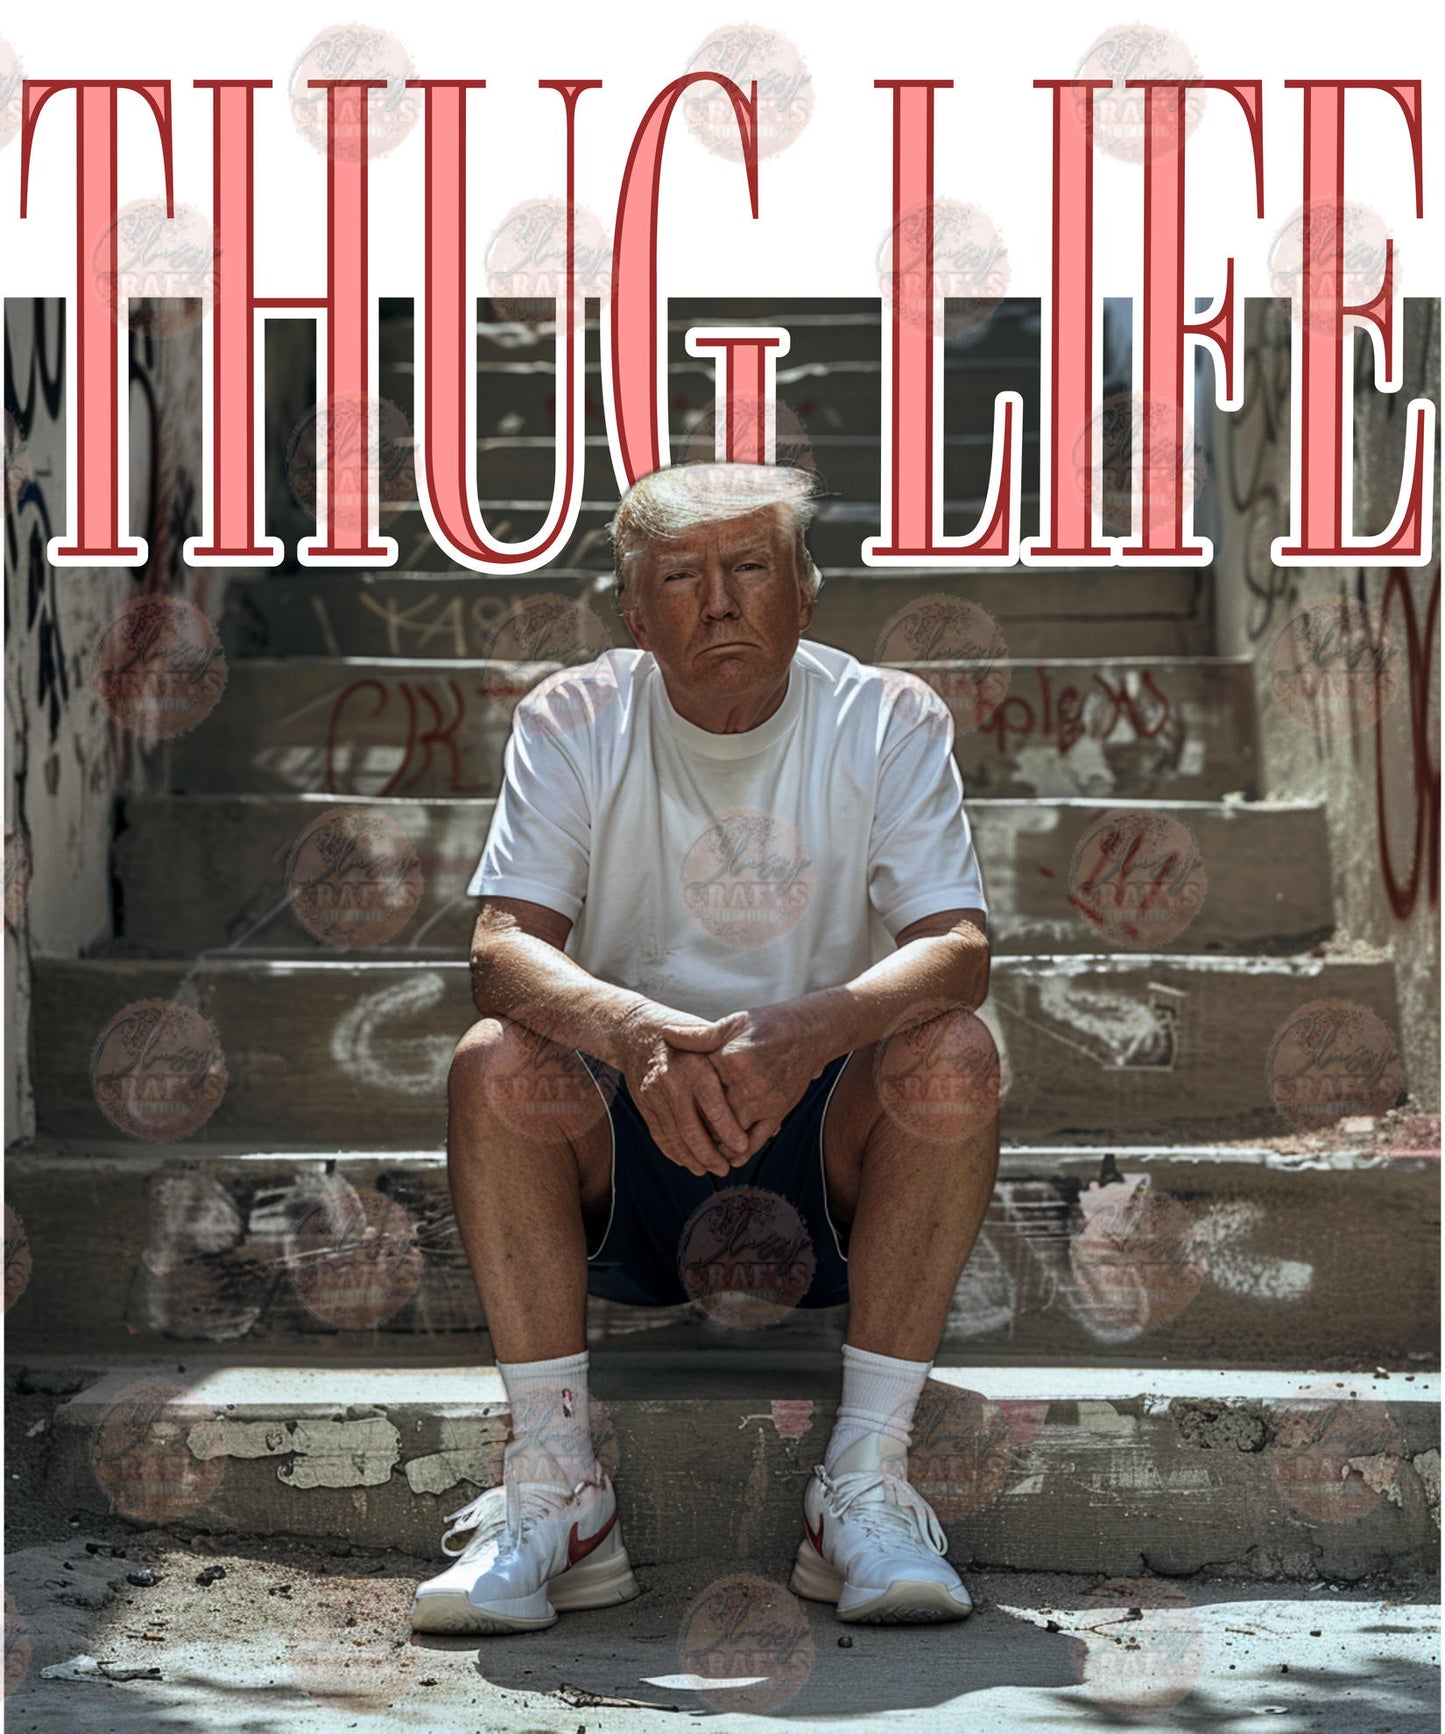 D.T. Thug Life Transfer